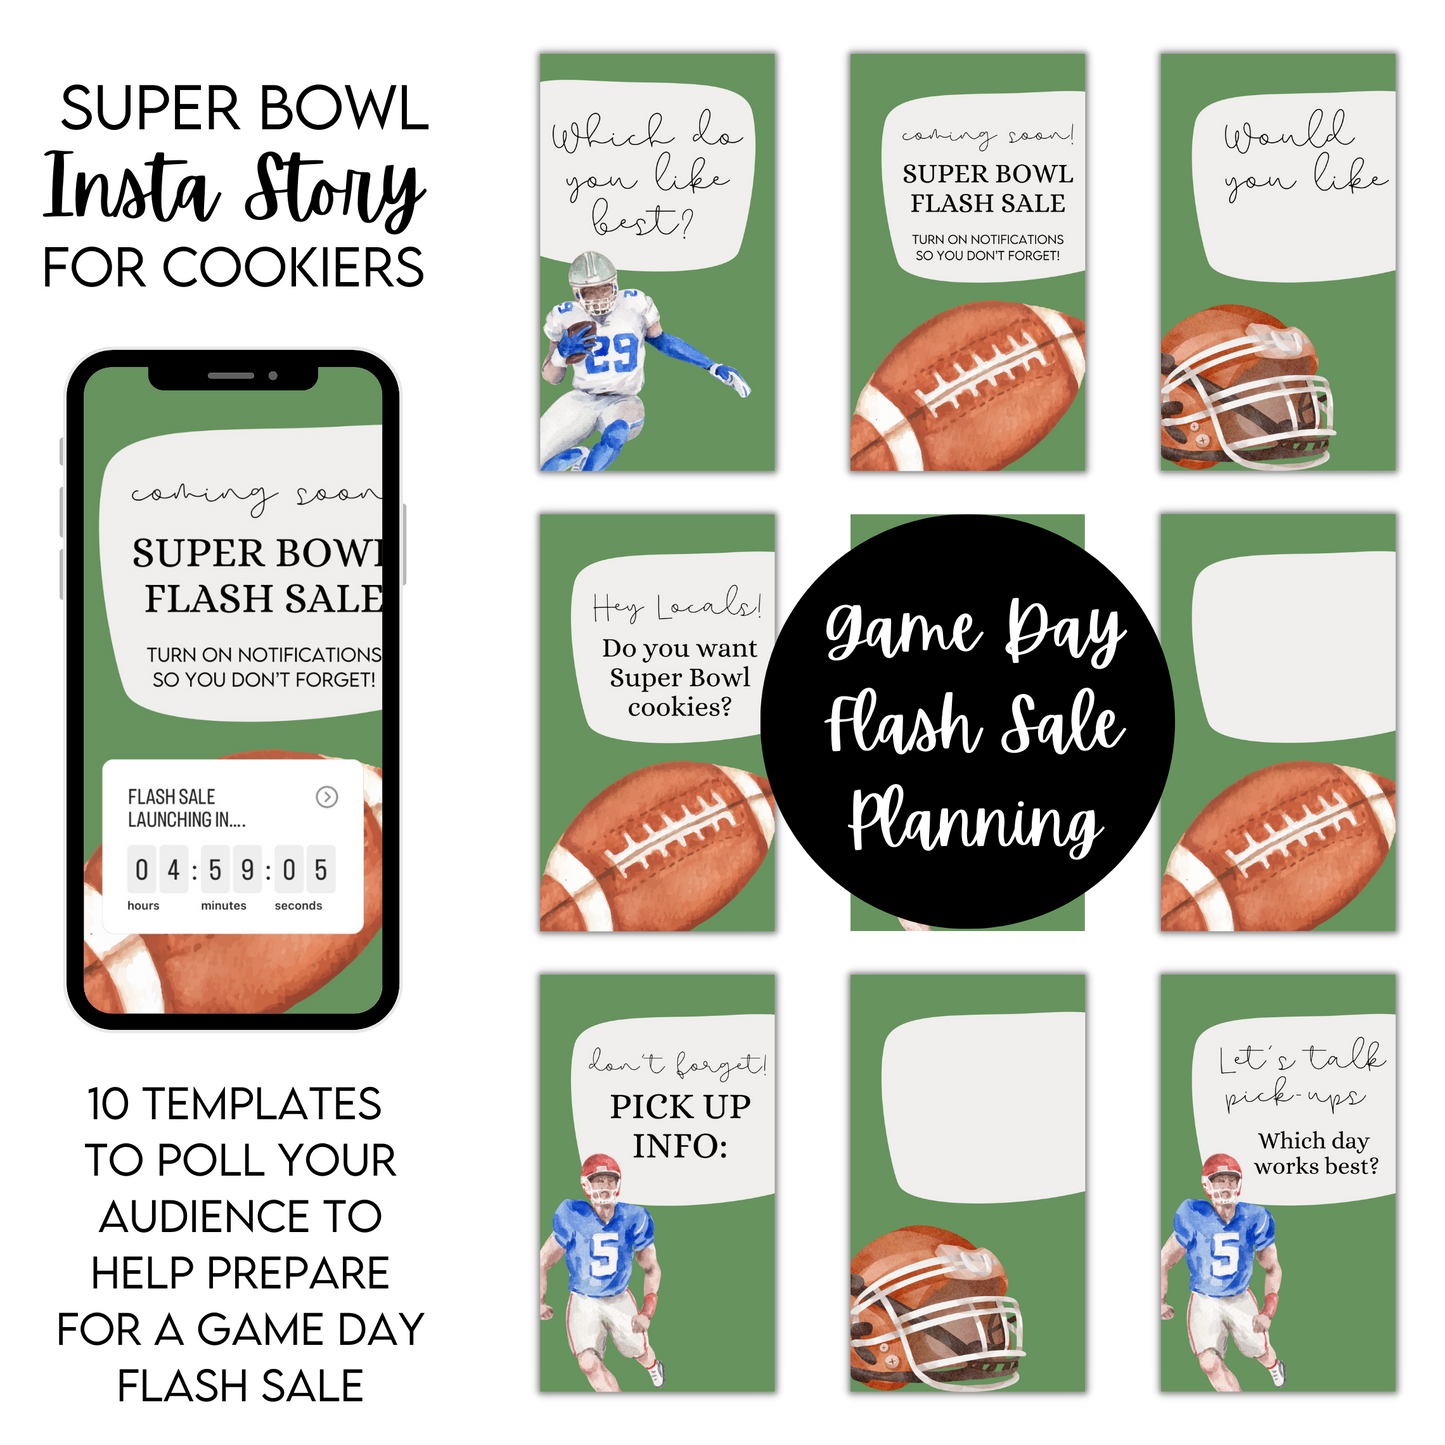 Super Bowl Flash Sale - Instagram Story & Templates - Presale & Pop-Up